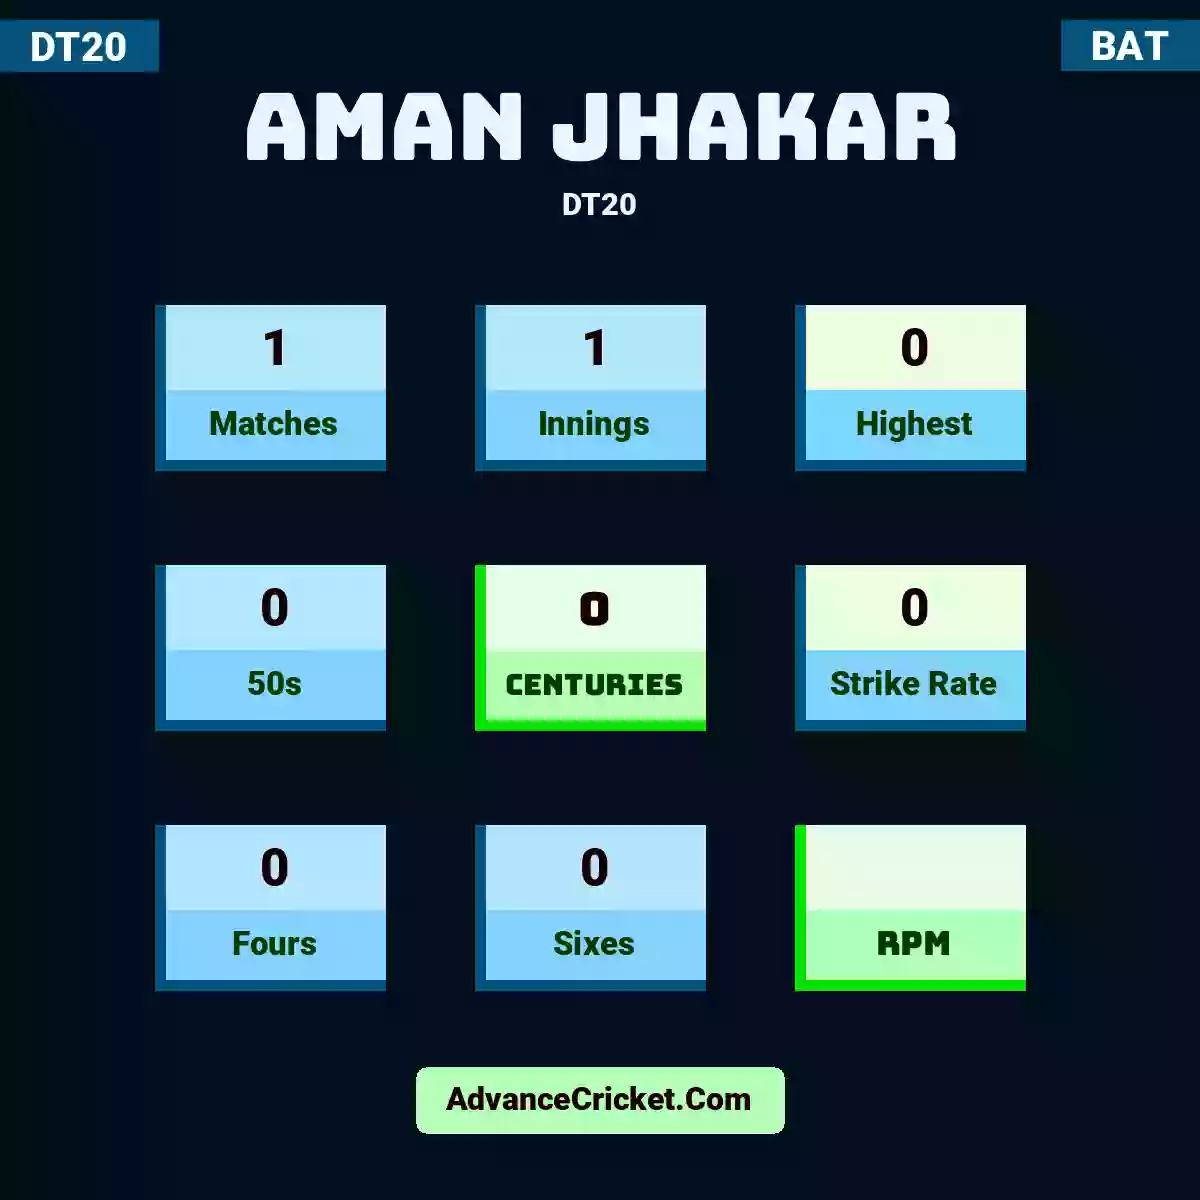 Aman Jhakar DT20 , Aman Jhakar played 1 matches, scored 0 runs as highest, 0 half-centuries, and 0 centuries, with a strike rate of 0. A.Jhakar hit 0 fours and 0 sixes.